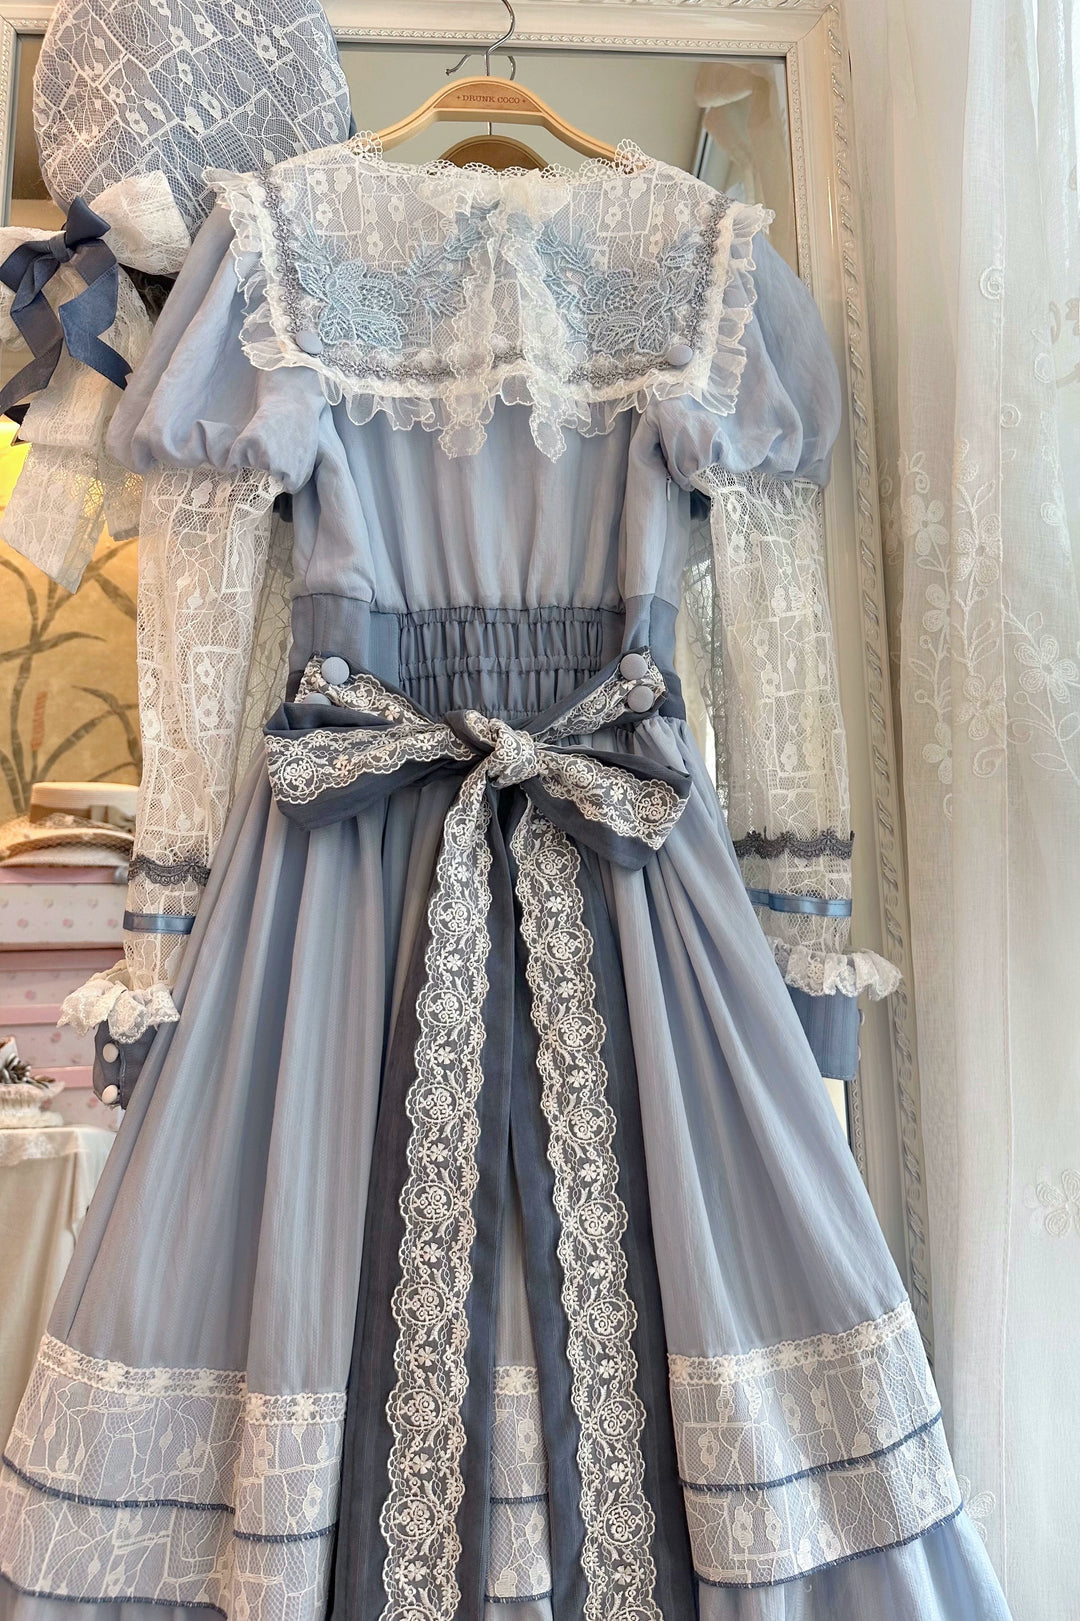 Mengfuzi~Yinglan Poetry~Elegant Classic Lolita OP Dress FS Embroidered Sailor Collar Dress   